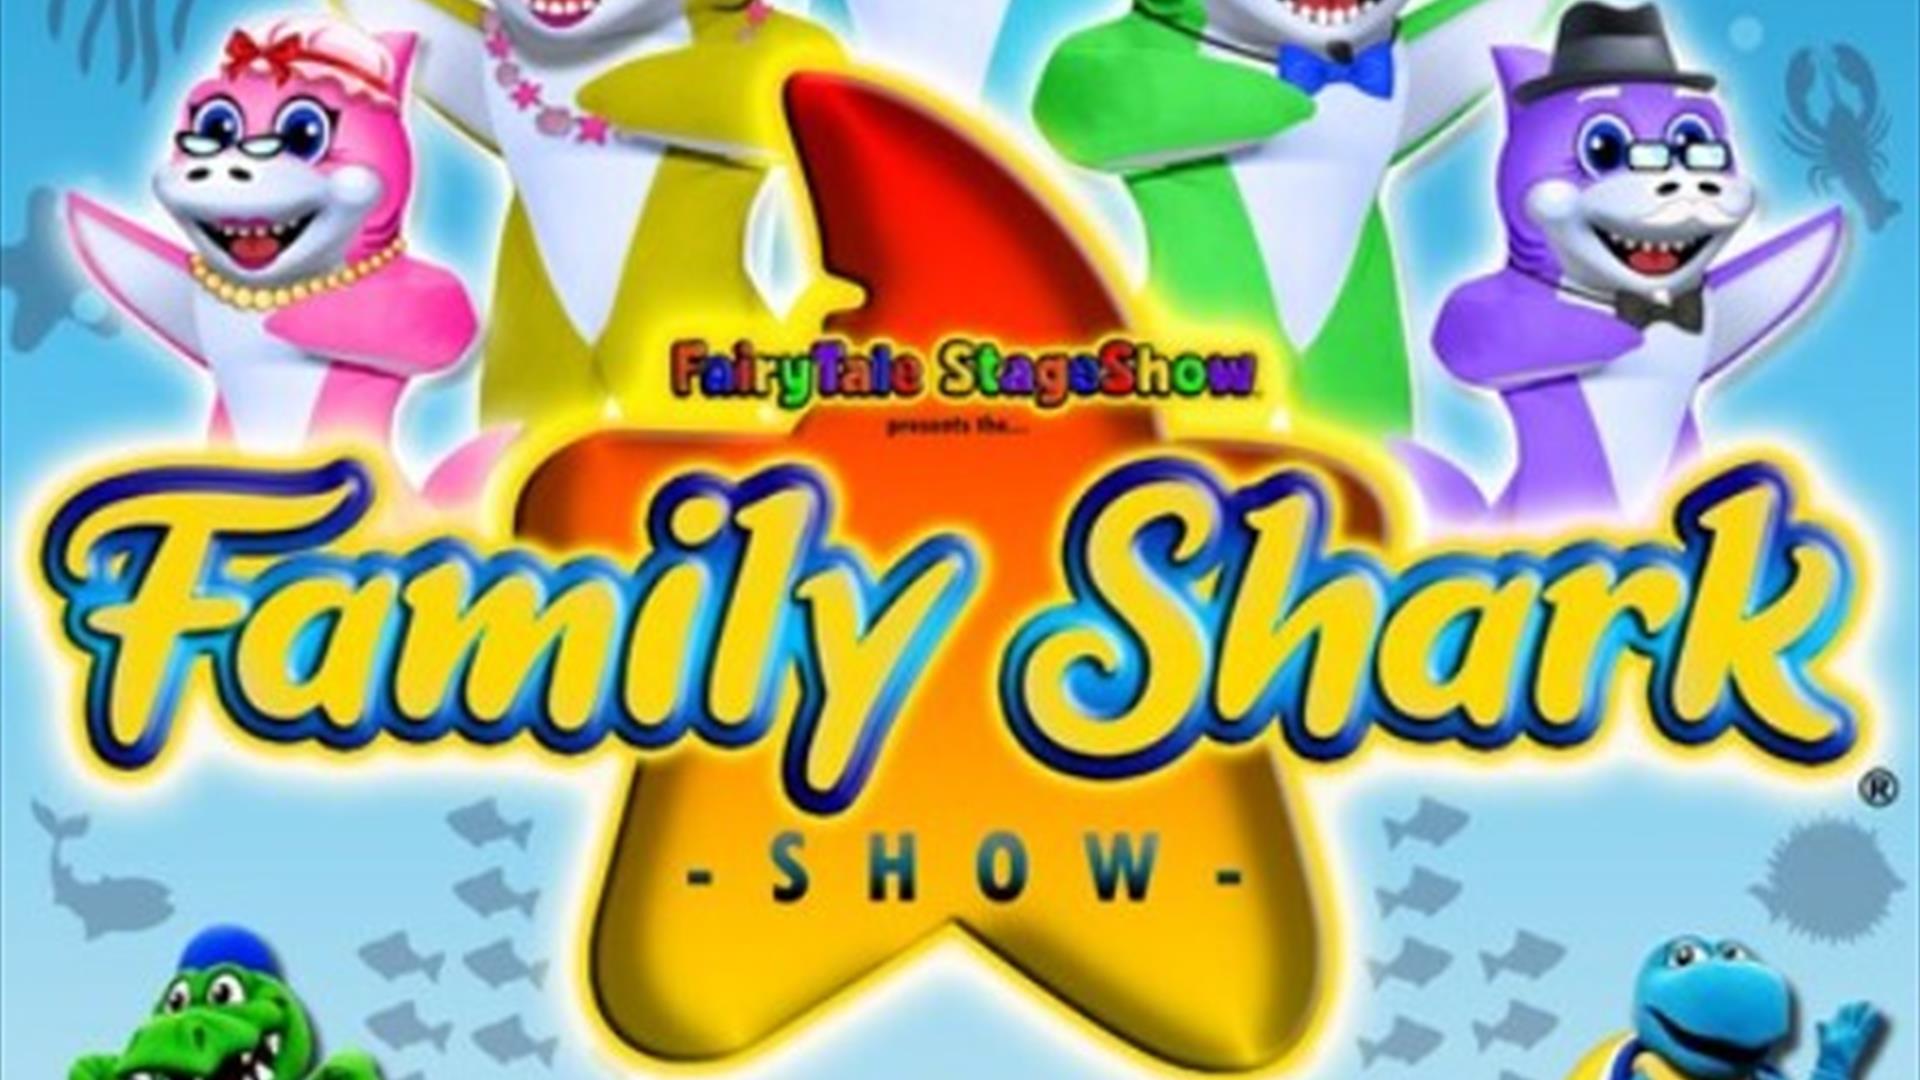 family shark show